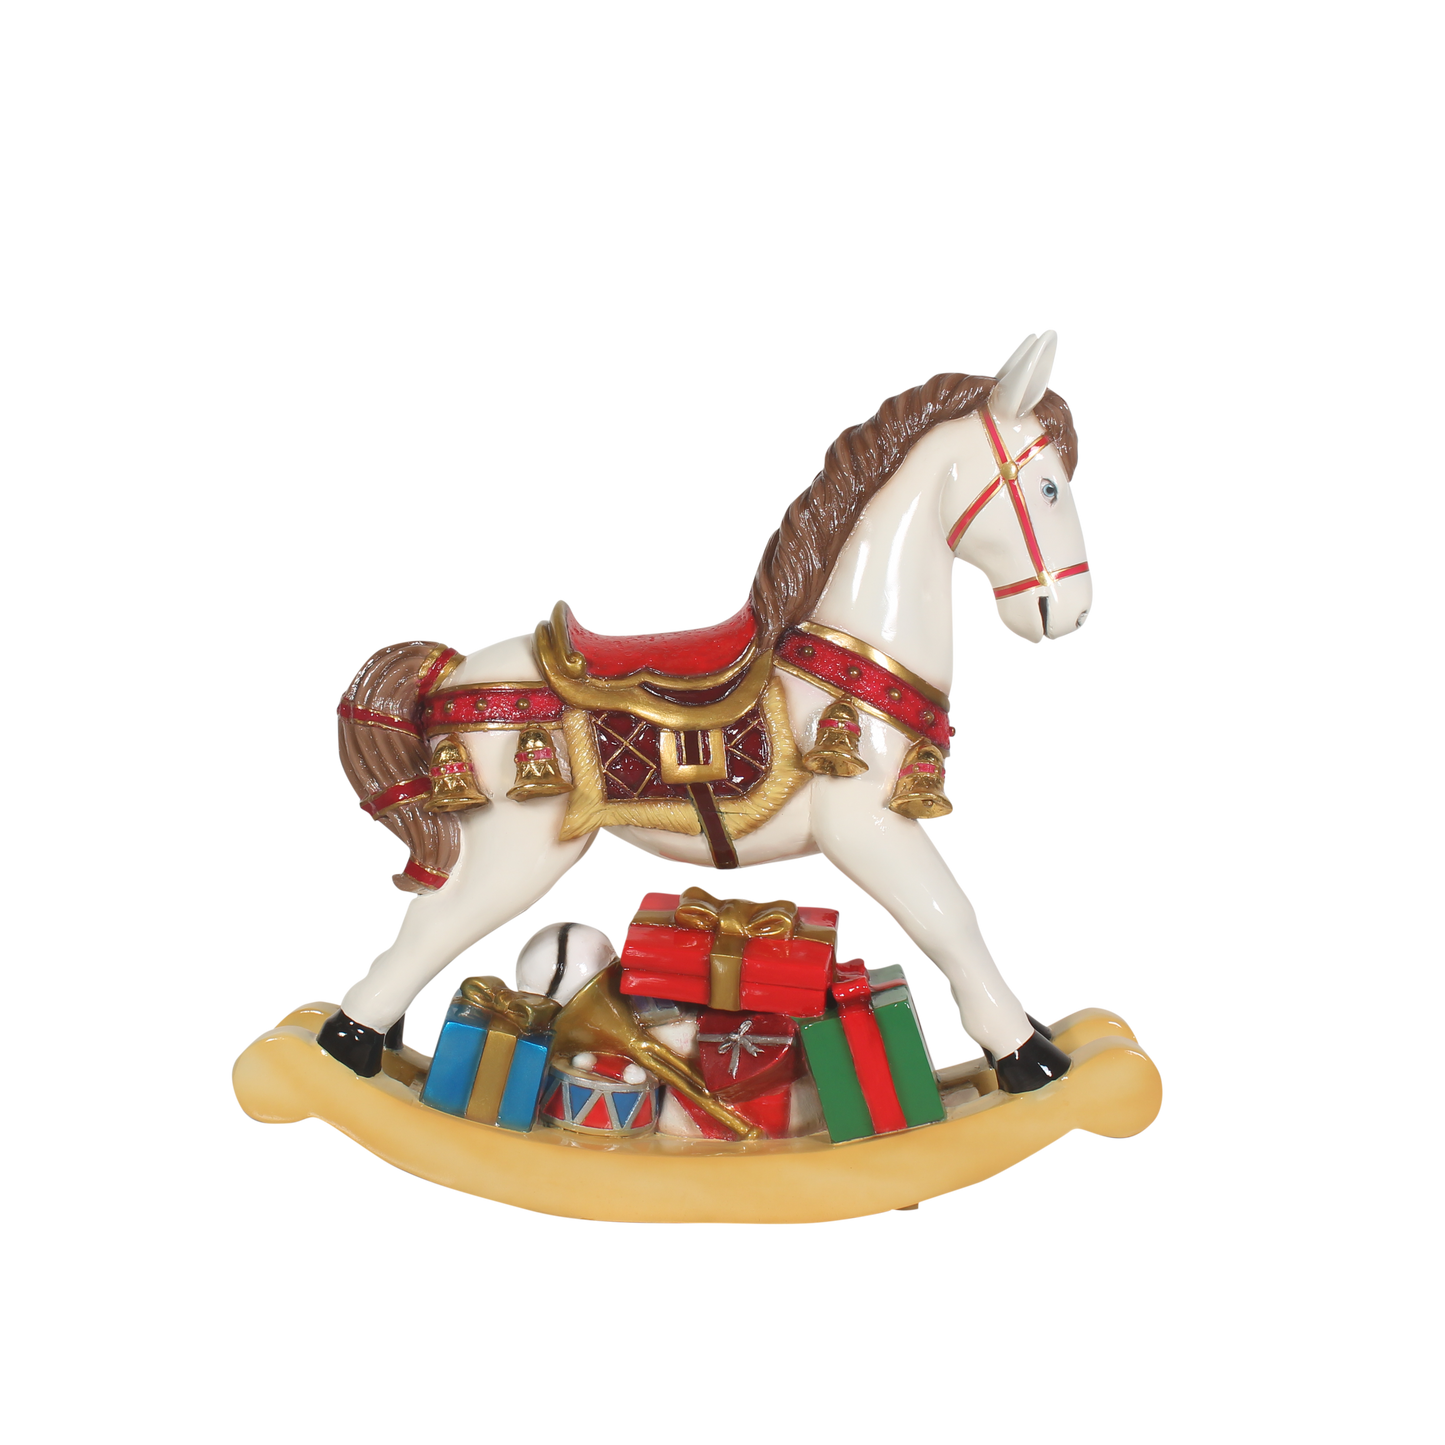 3ft Fiberglass Resin Rocking Horse w/Gifts Statue